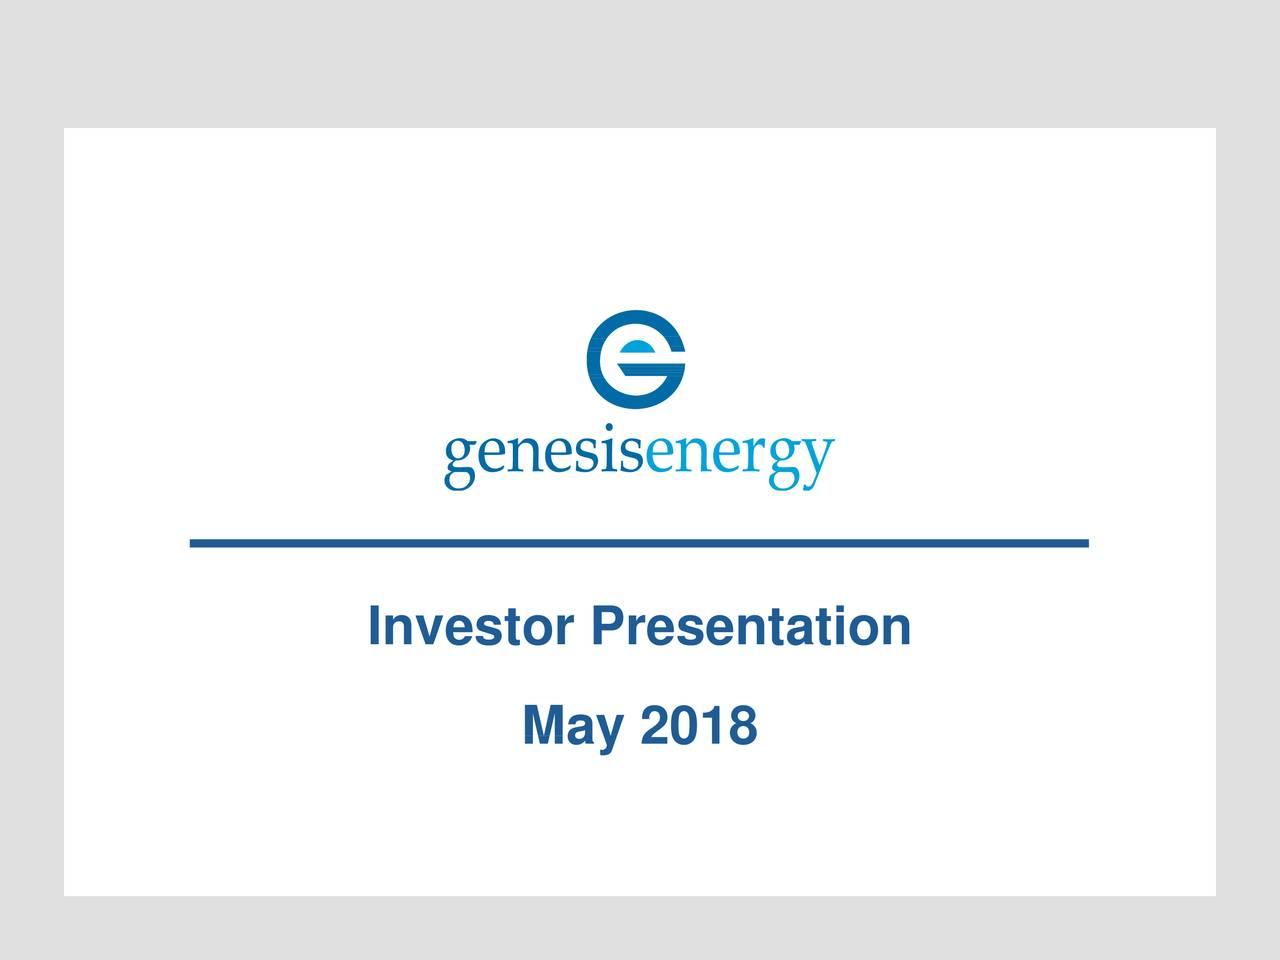 genesis-energy-logo-logodix